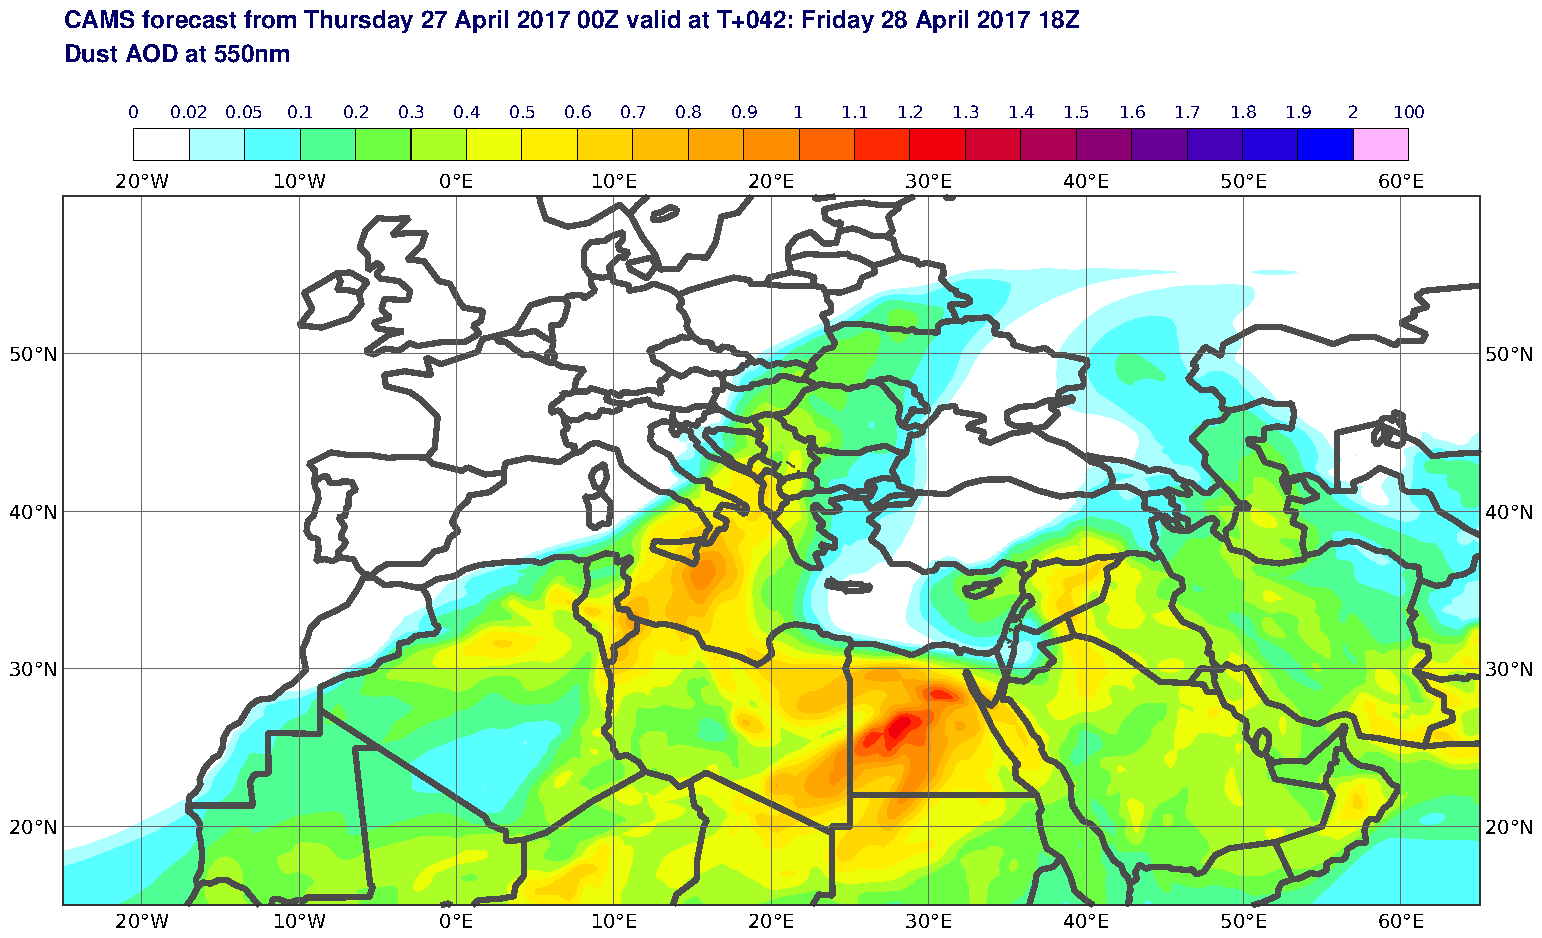 Dust AOD at 550nm valid at T42 - 2017-04-28 18:00